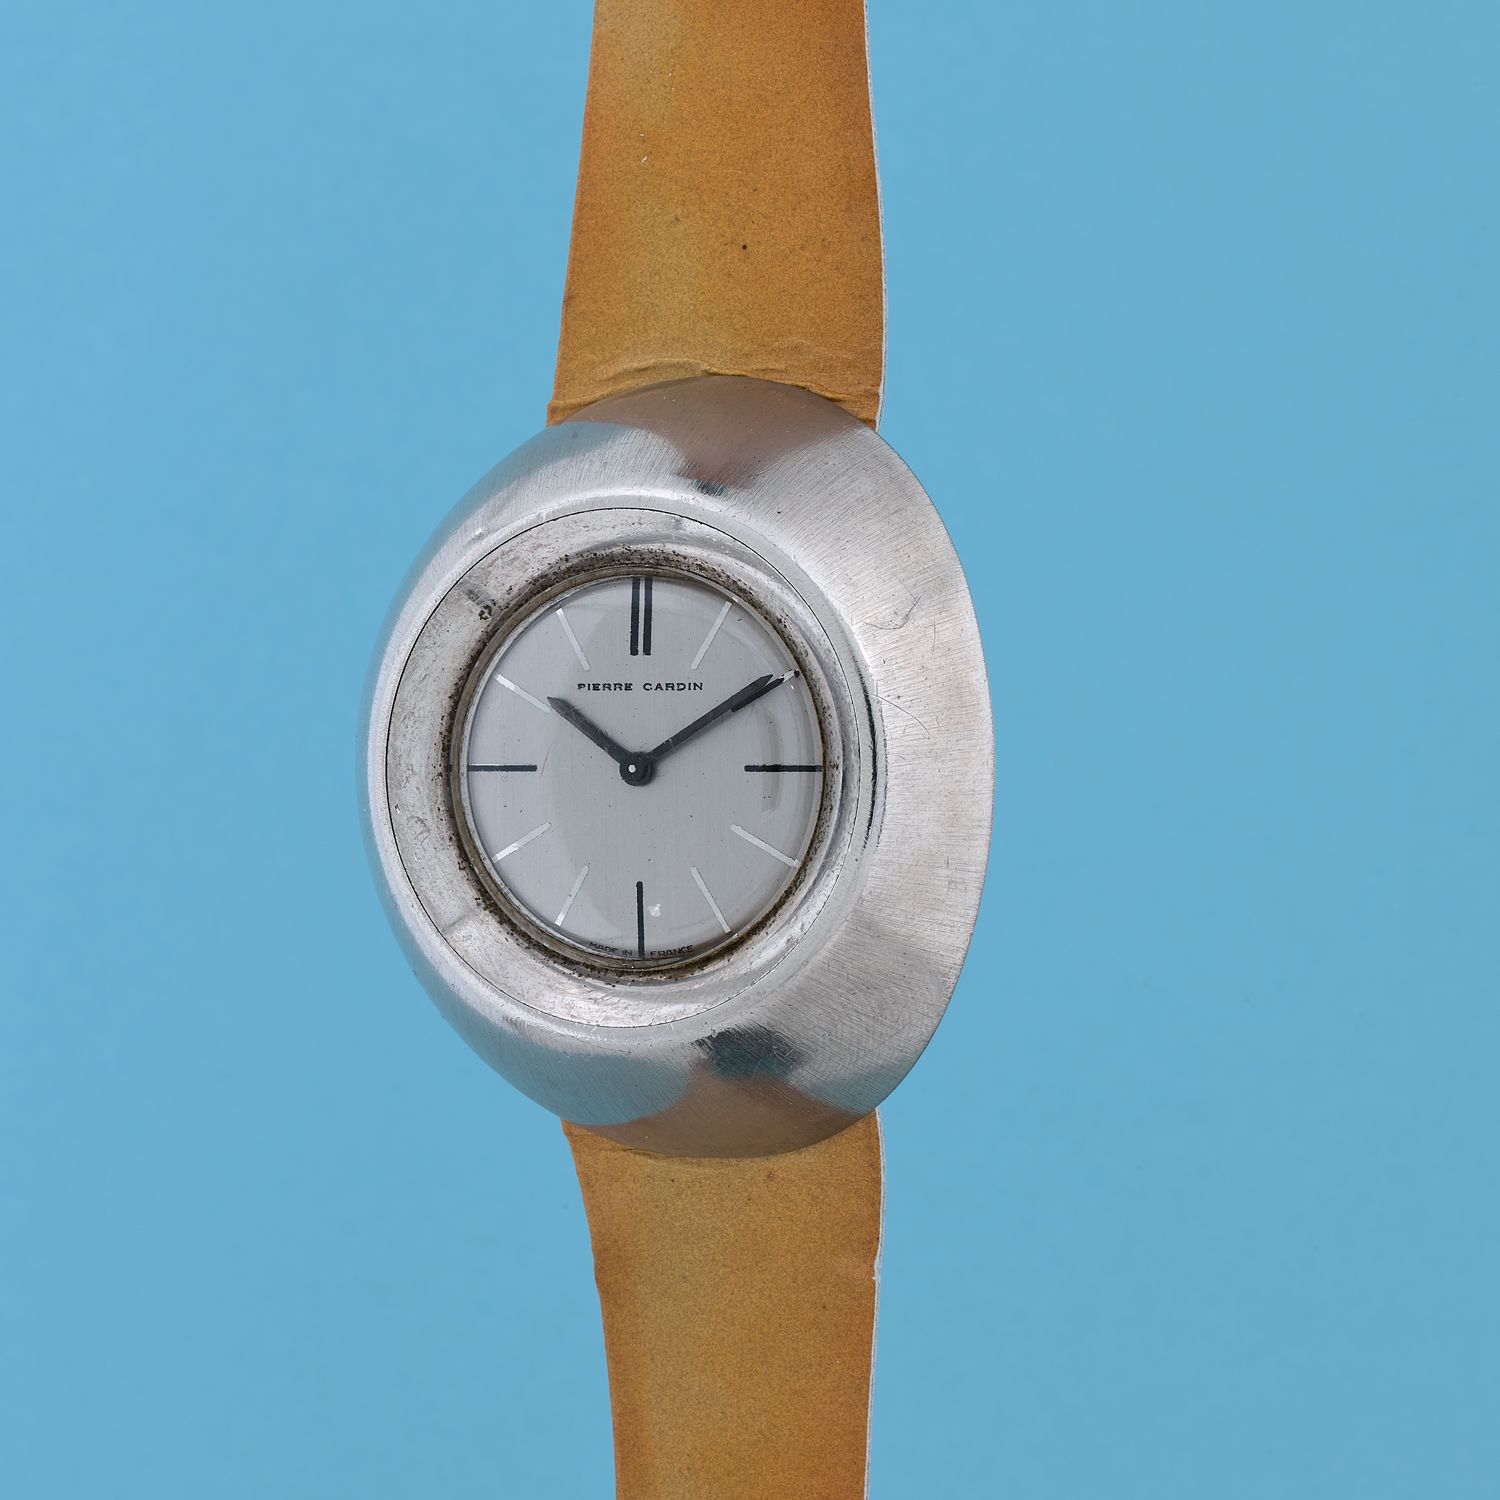 Null PIERRE CARDIN by JAEGER.
PC 104.
Circa: 1970.
Steel bracelet watch with chr&hellip;